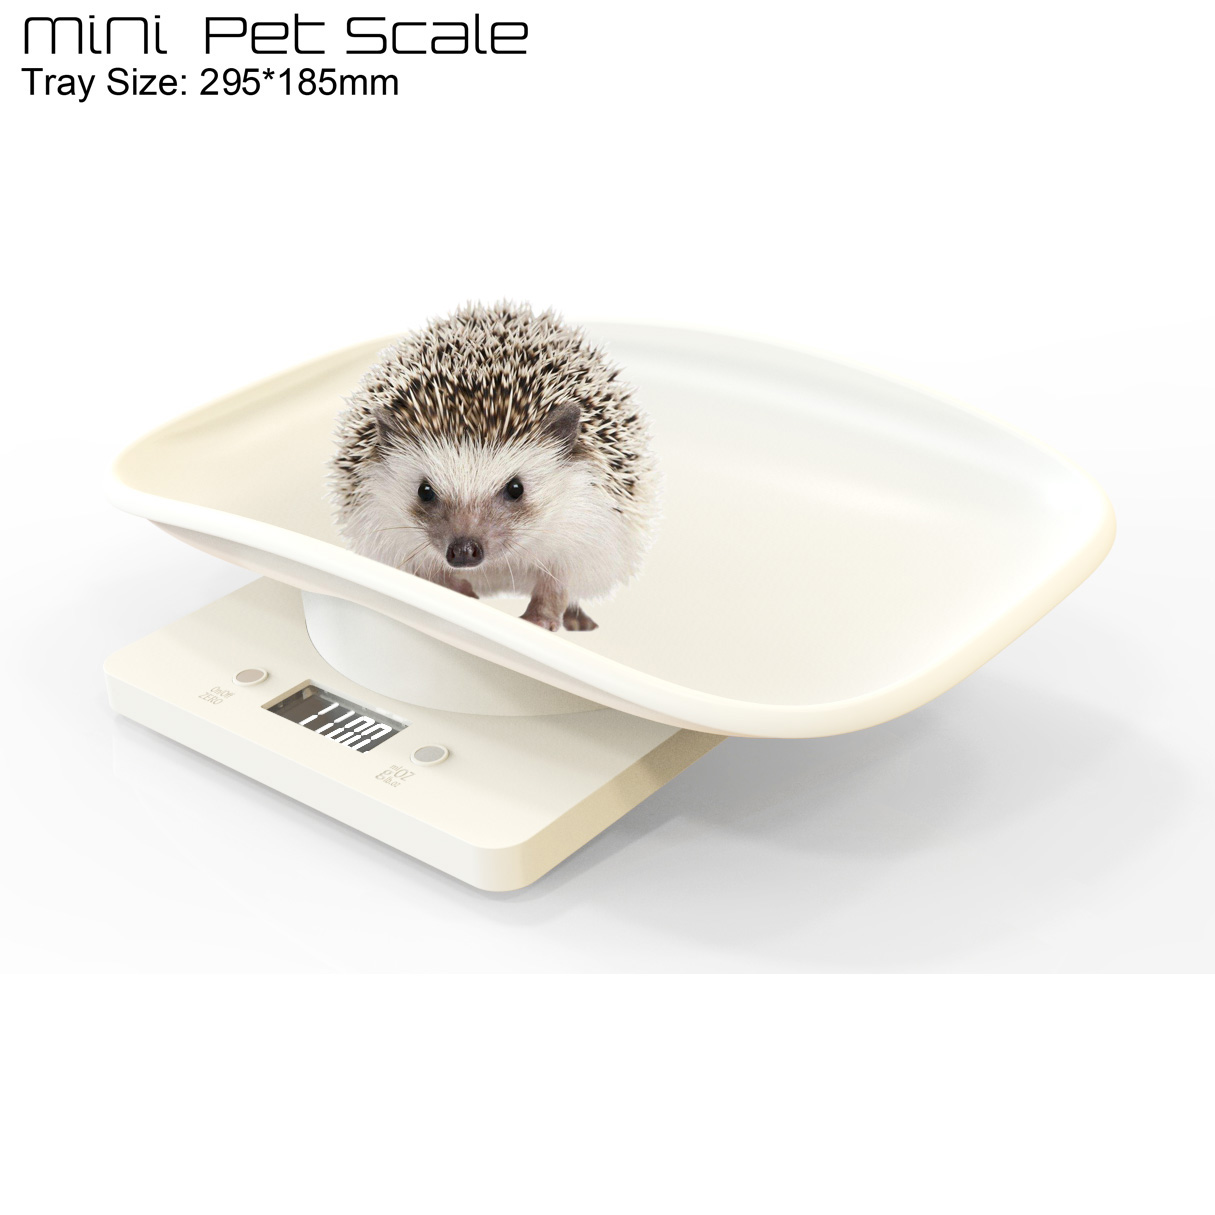 mini pet scale 